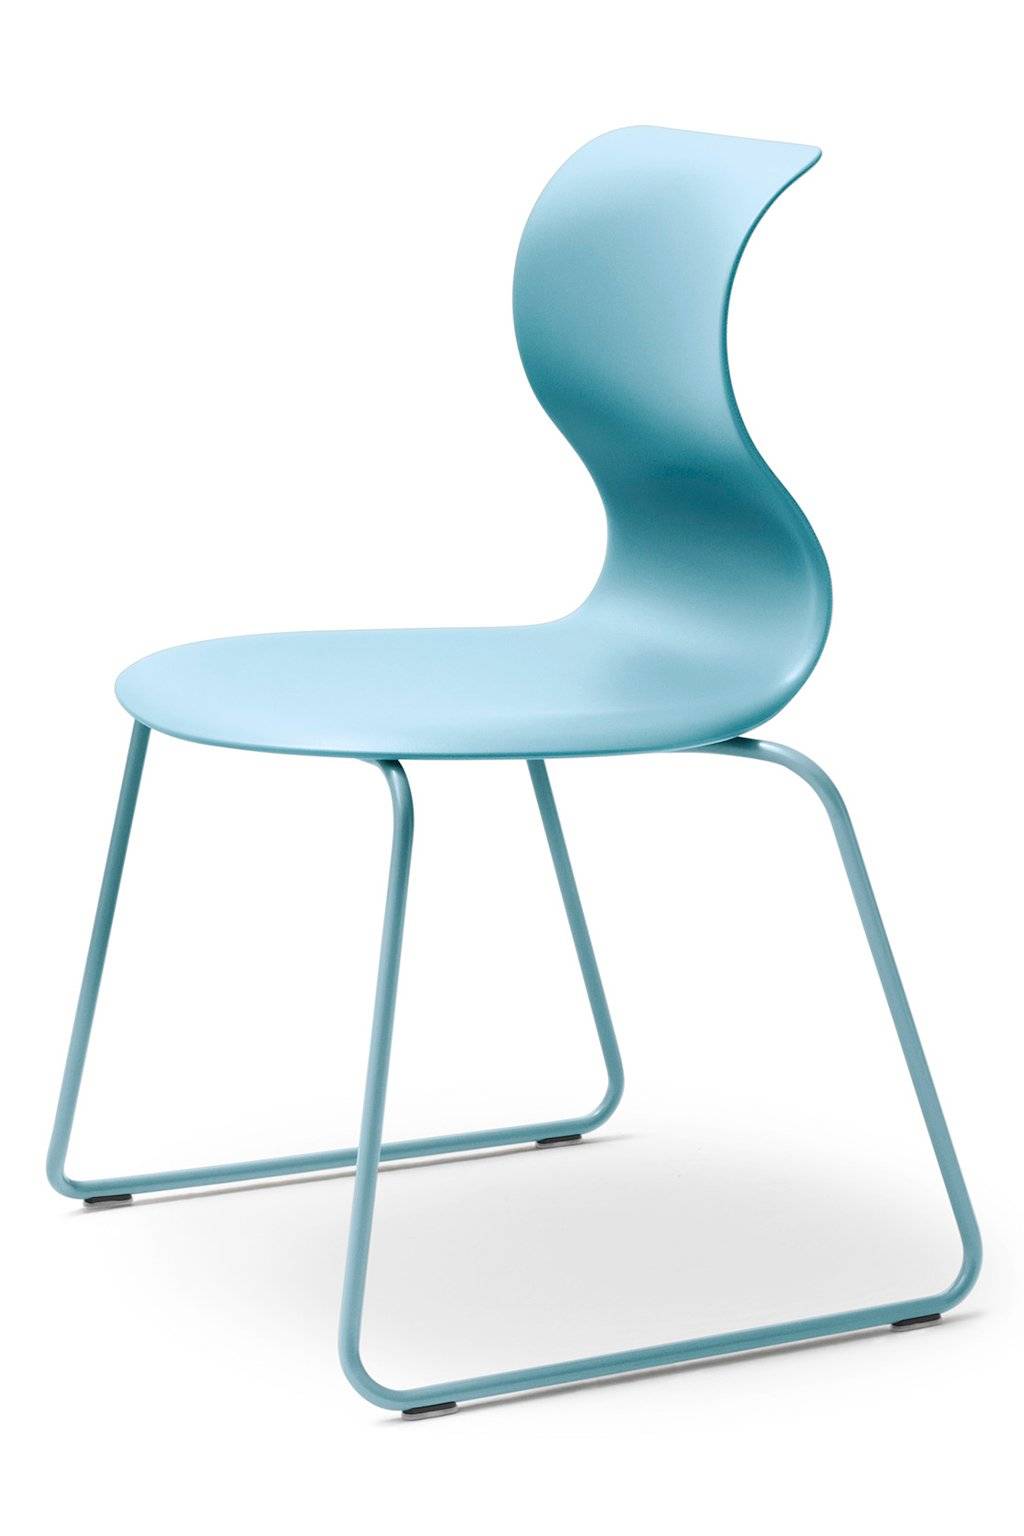 pro chair skid frame